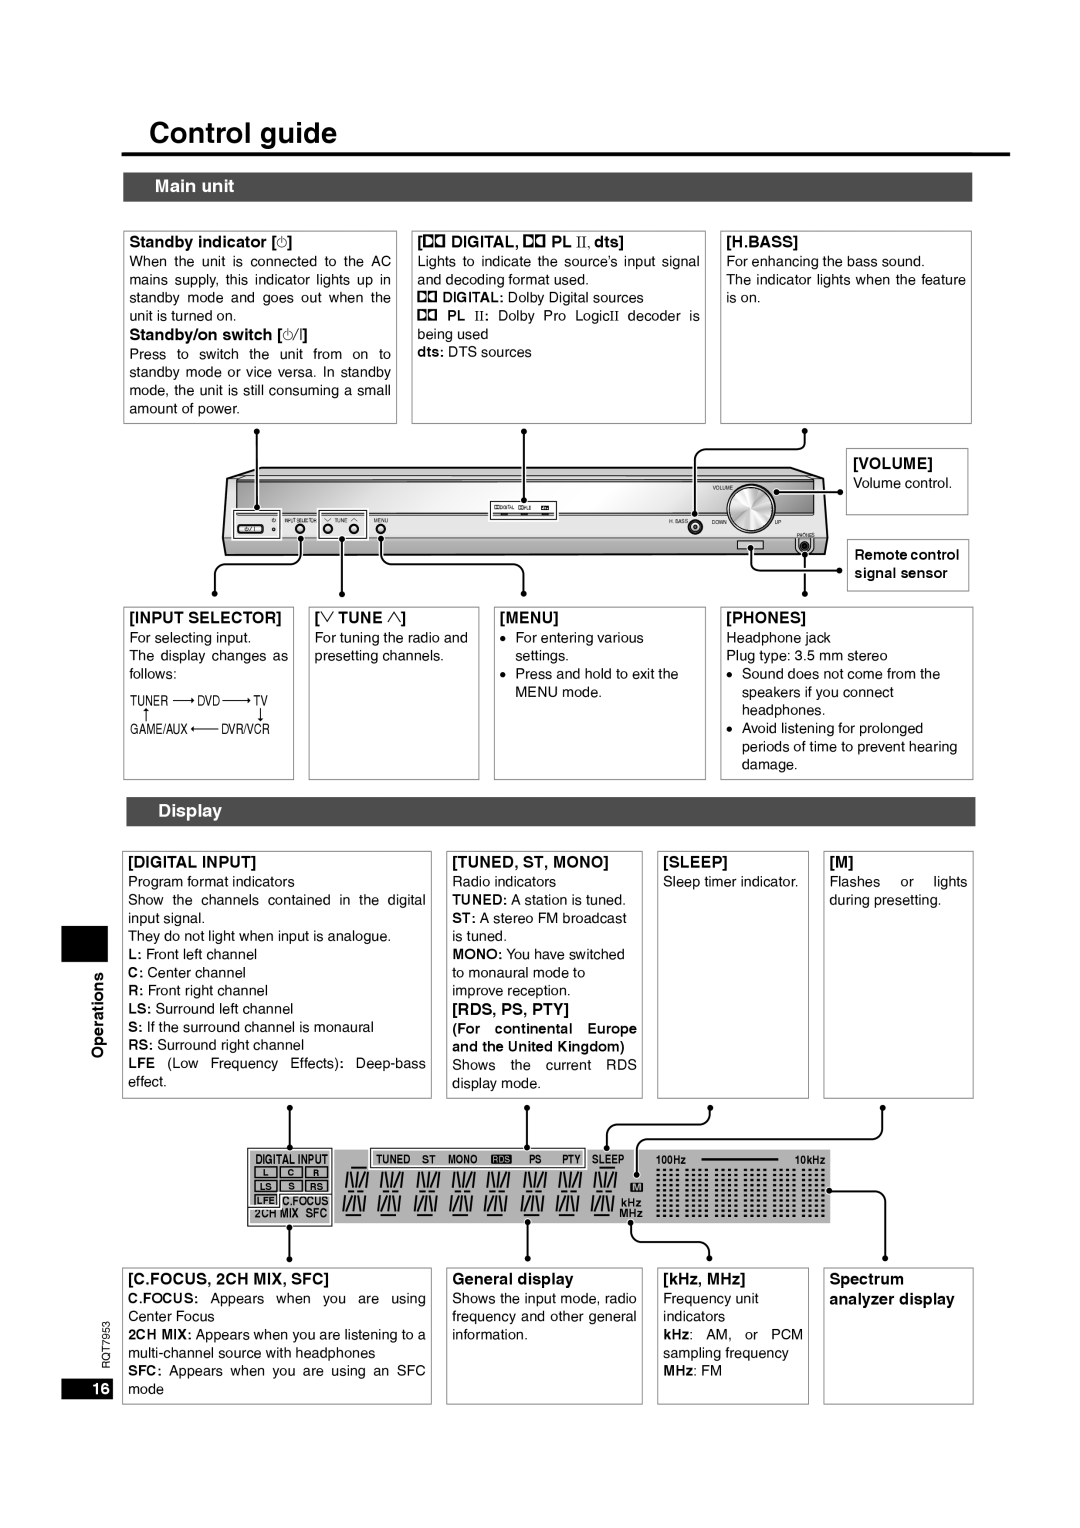 Panasonic SC-HT17 operating instructions Control guide, Main unit, Display 